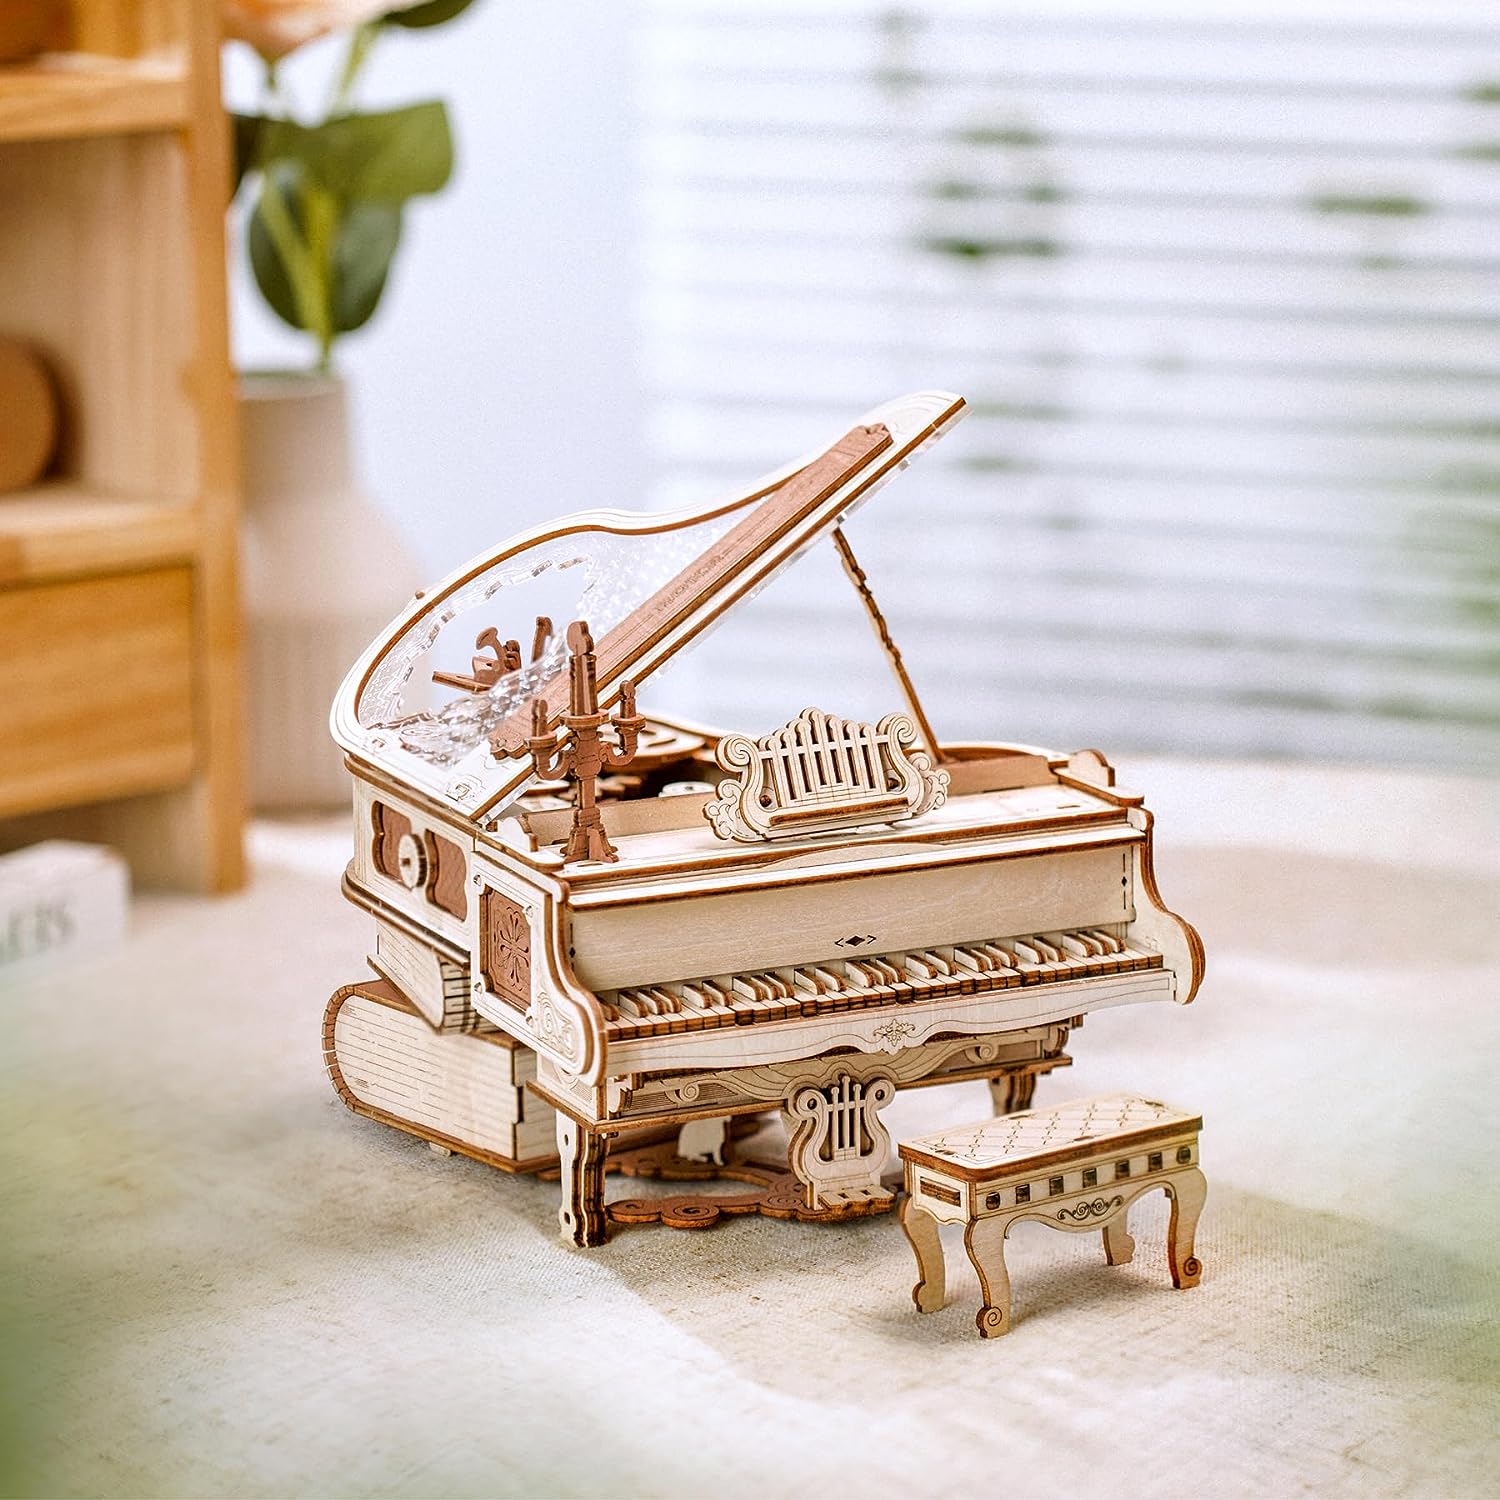 DIY Music Box, Mechanical Music Box Wooden Puzzle